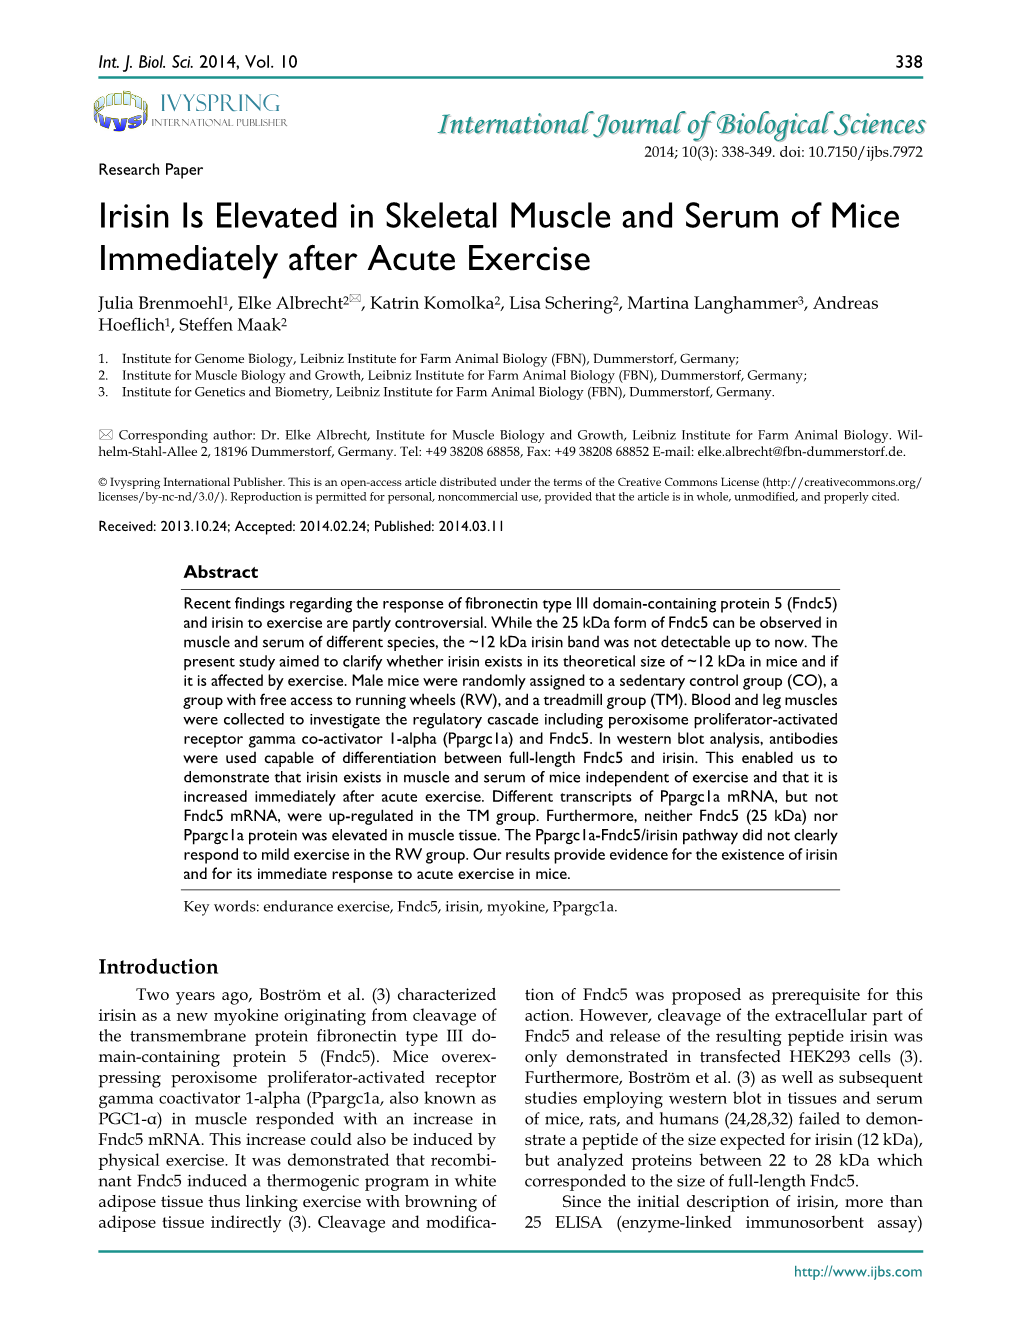 Irisin Is Elevated in Skeletal Muscle and Serum of Mice Immediately